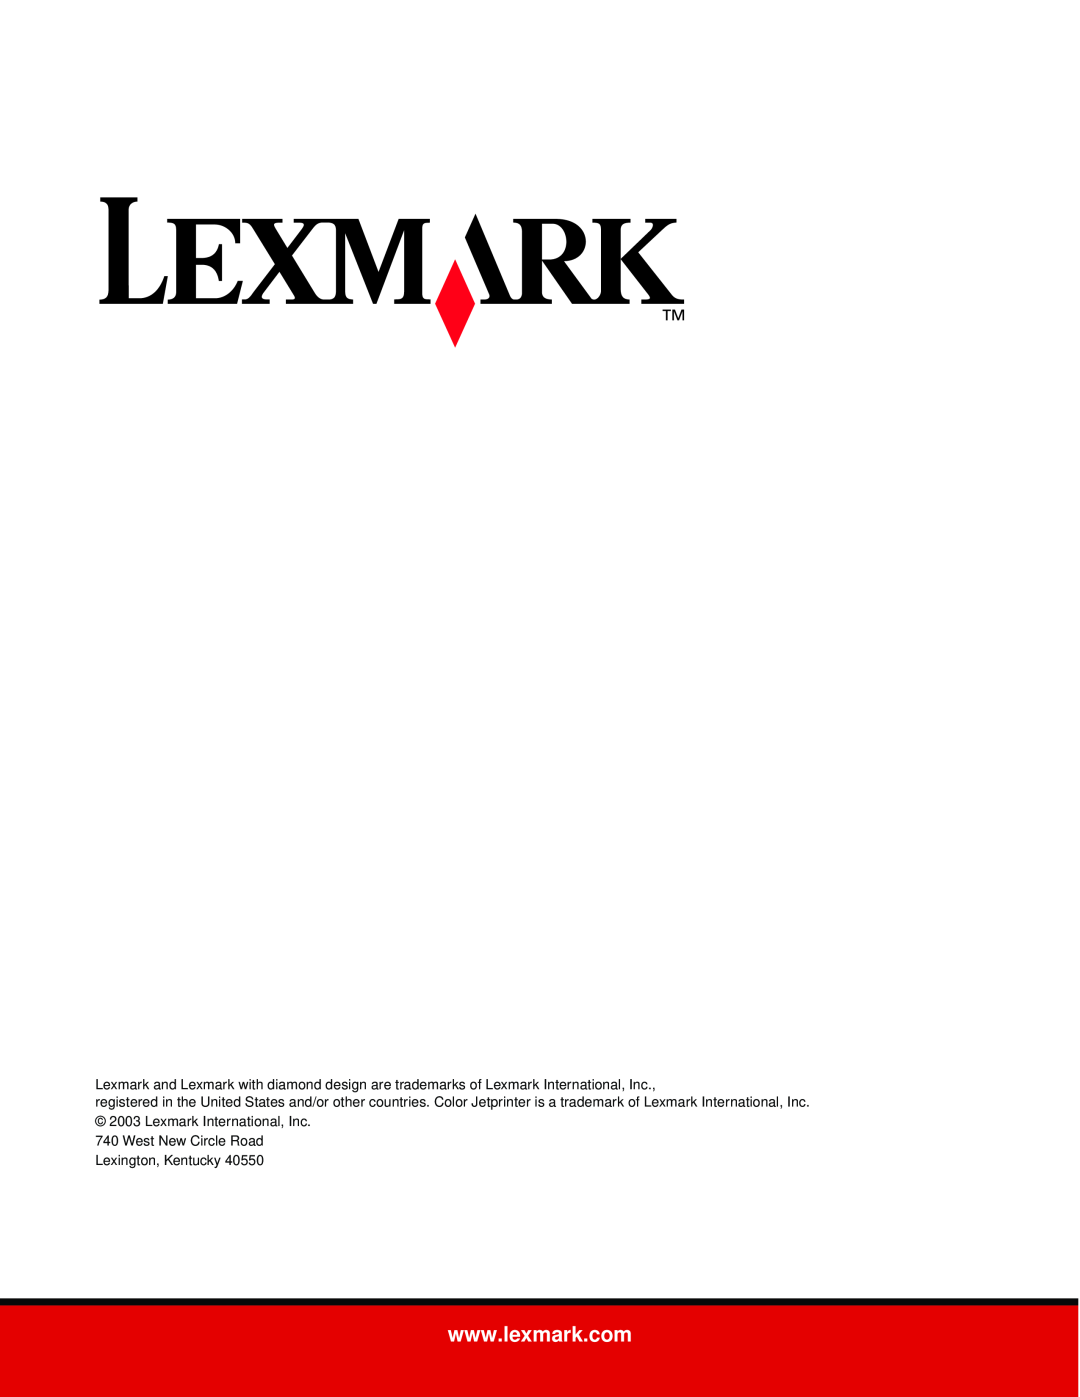 Lexmark Z600 Series manual West New Circle Road Lexington, Kentucky 